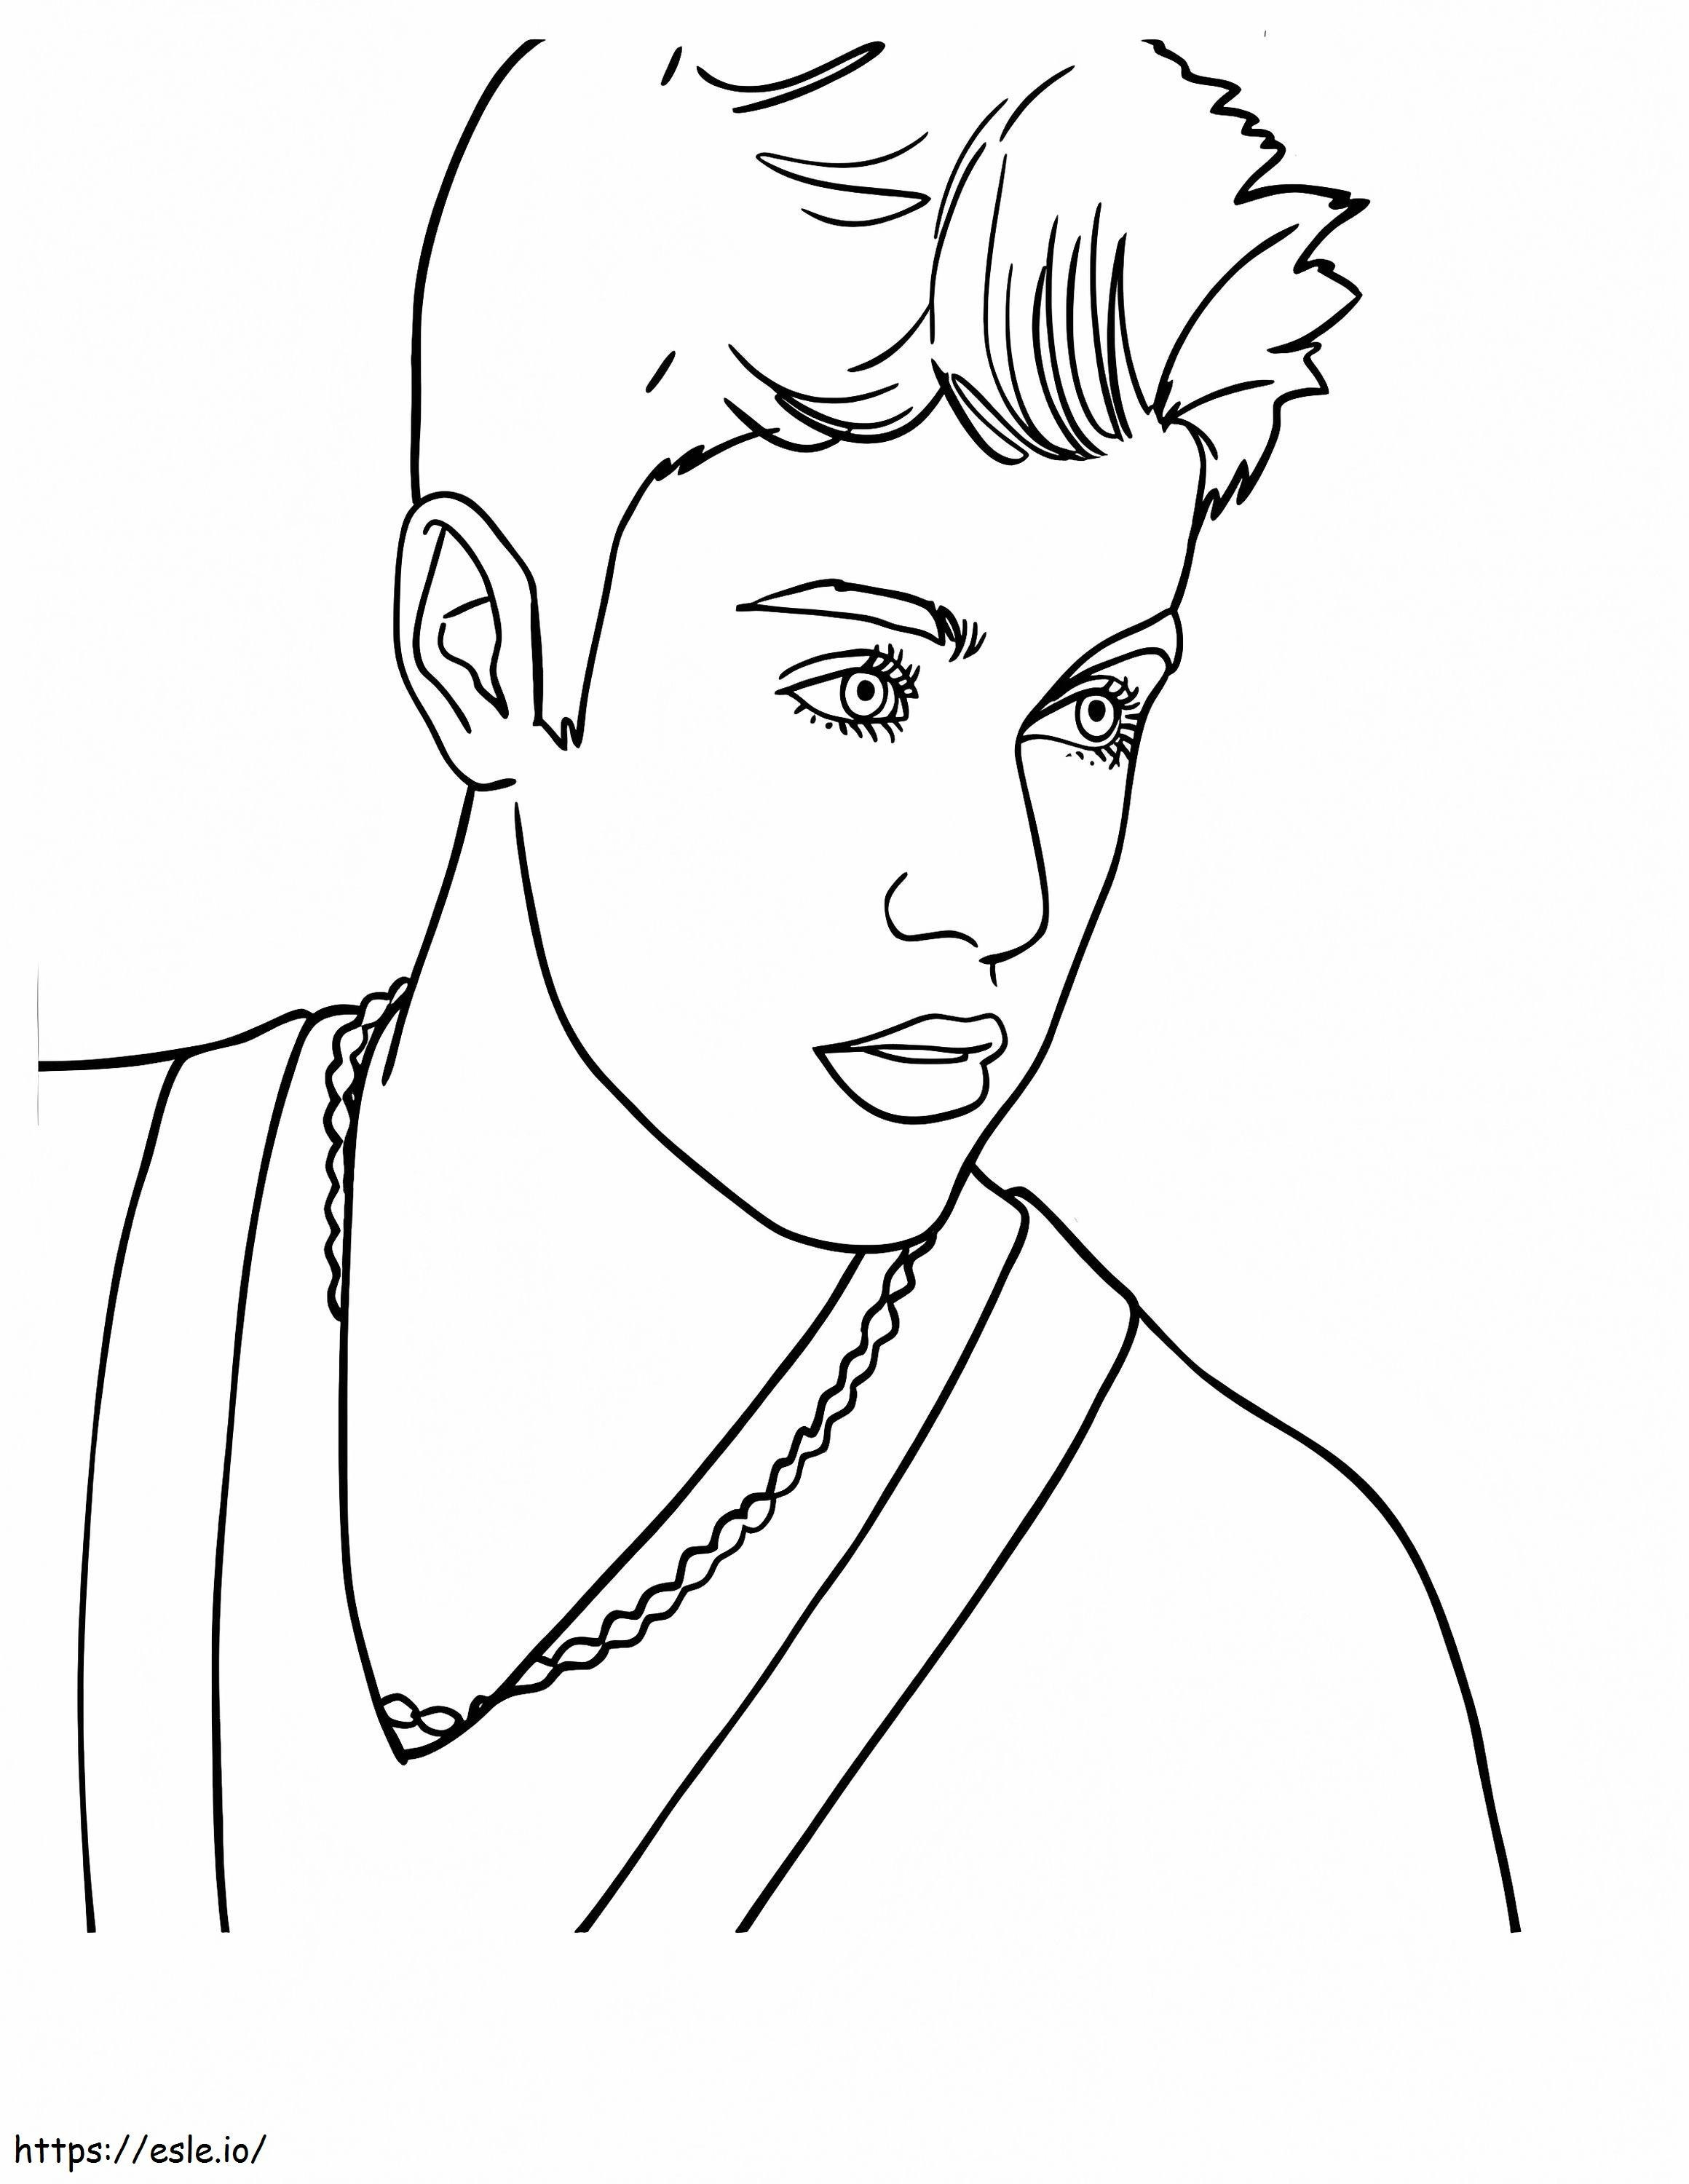 1541131259 Canadian Pop Singer Justin Bieber At Justin Bieber coloring page